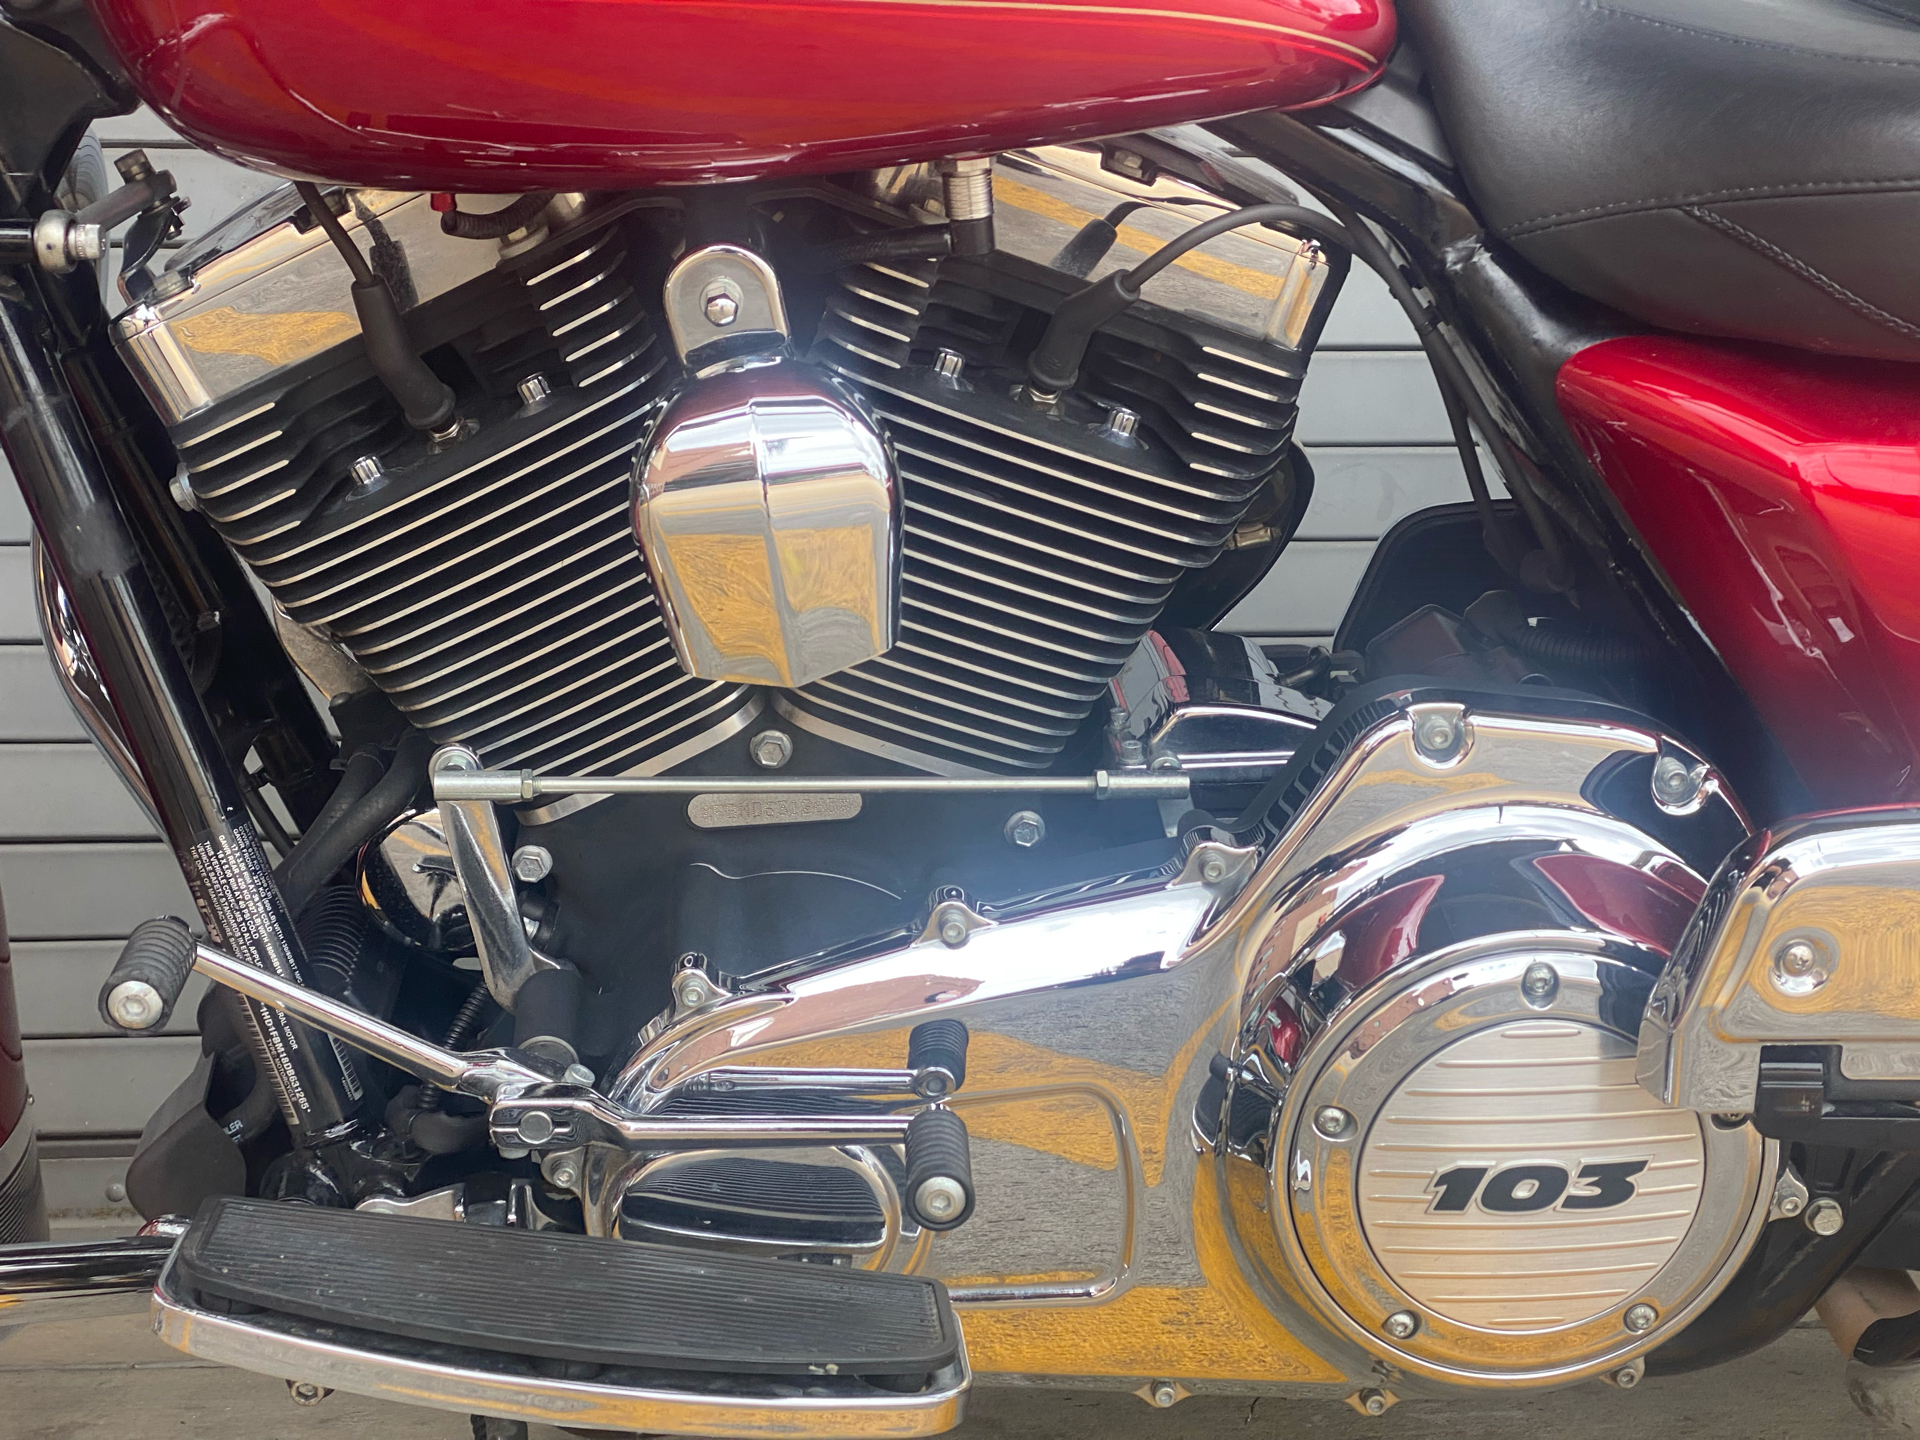 2013 Harley-Davidson Road King® in Carrollton, Texas - Photo 15